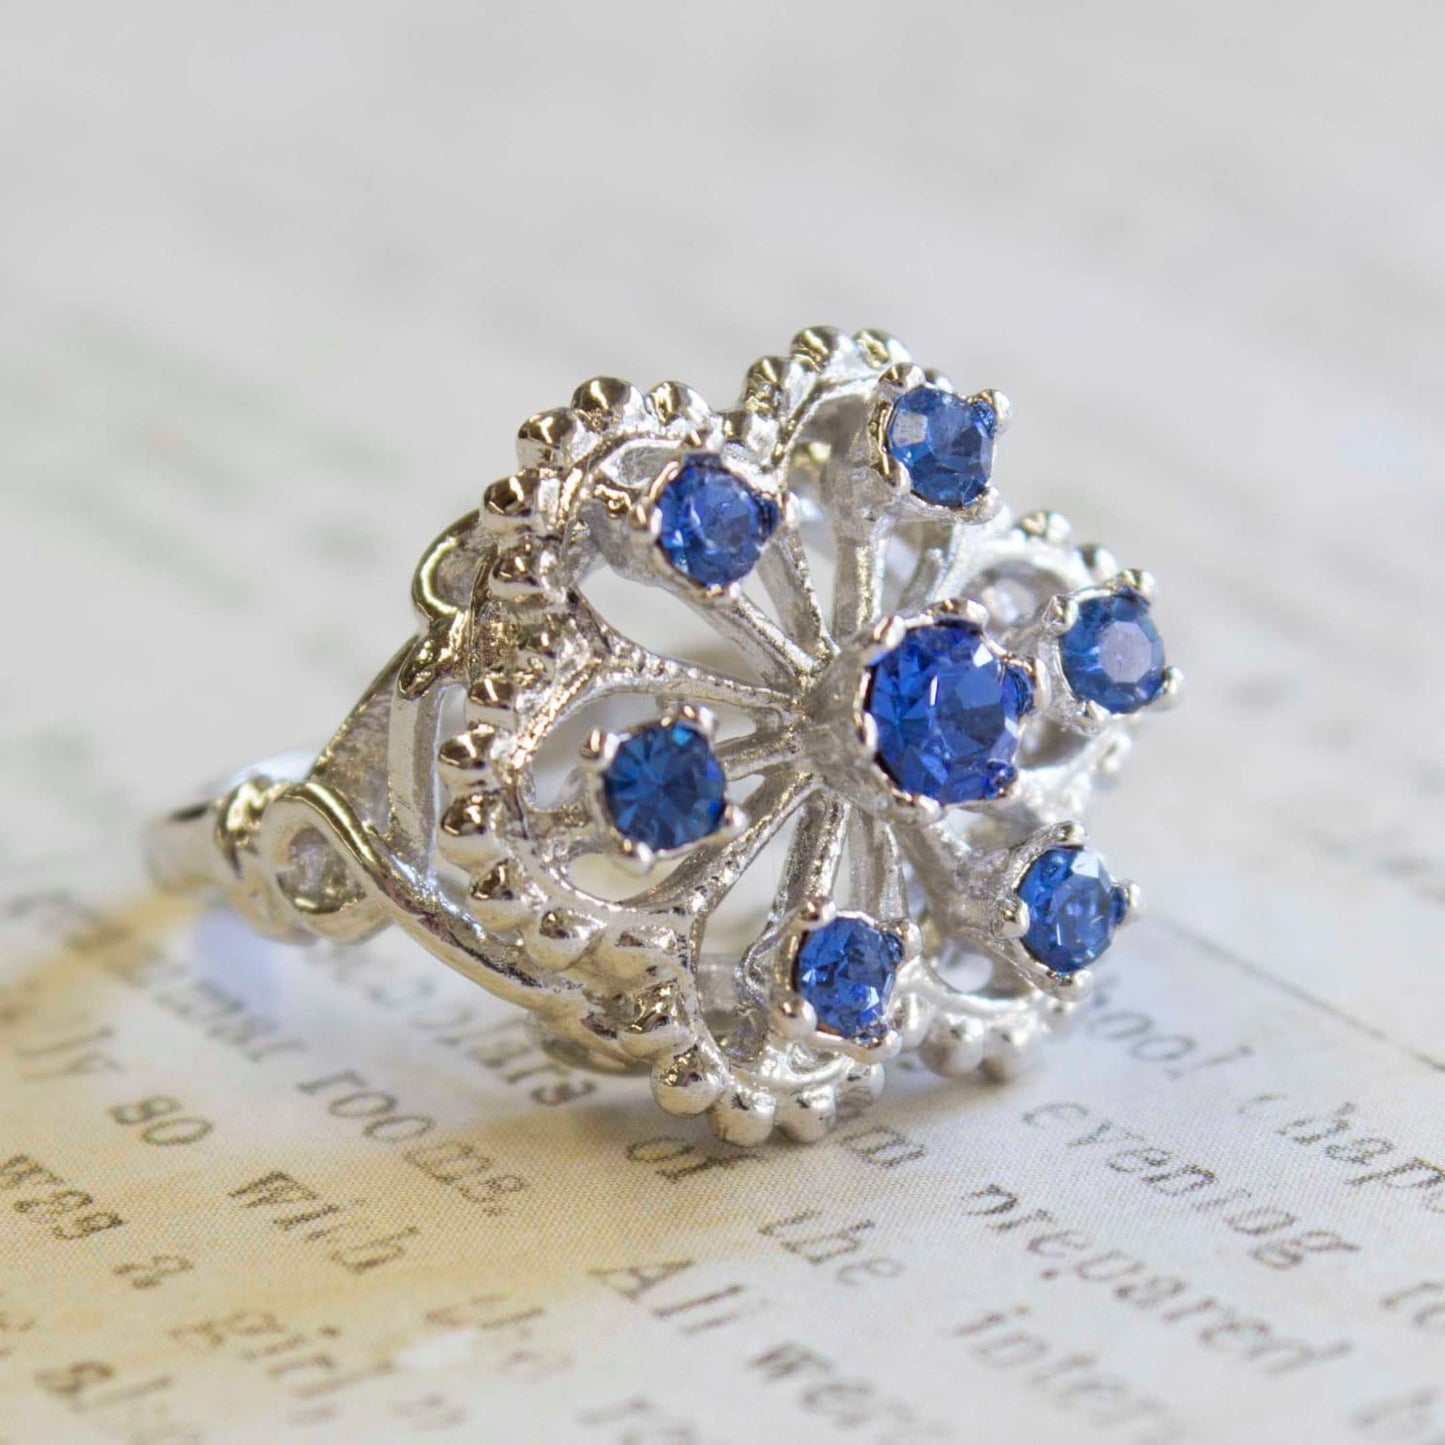 Vintage Ring Filigree Style 18k White Gold Ring Blue Tanzanite Swarovski Crystals Edwardian Style Antique #R103 - Limited Stock - Never Worn